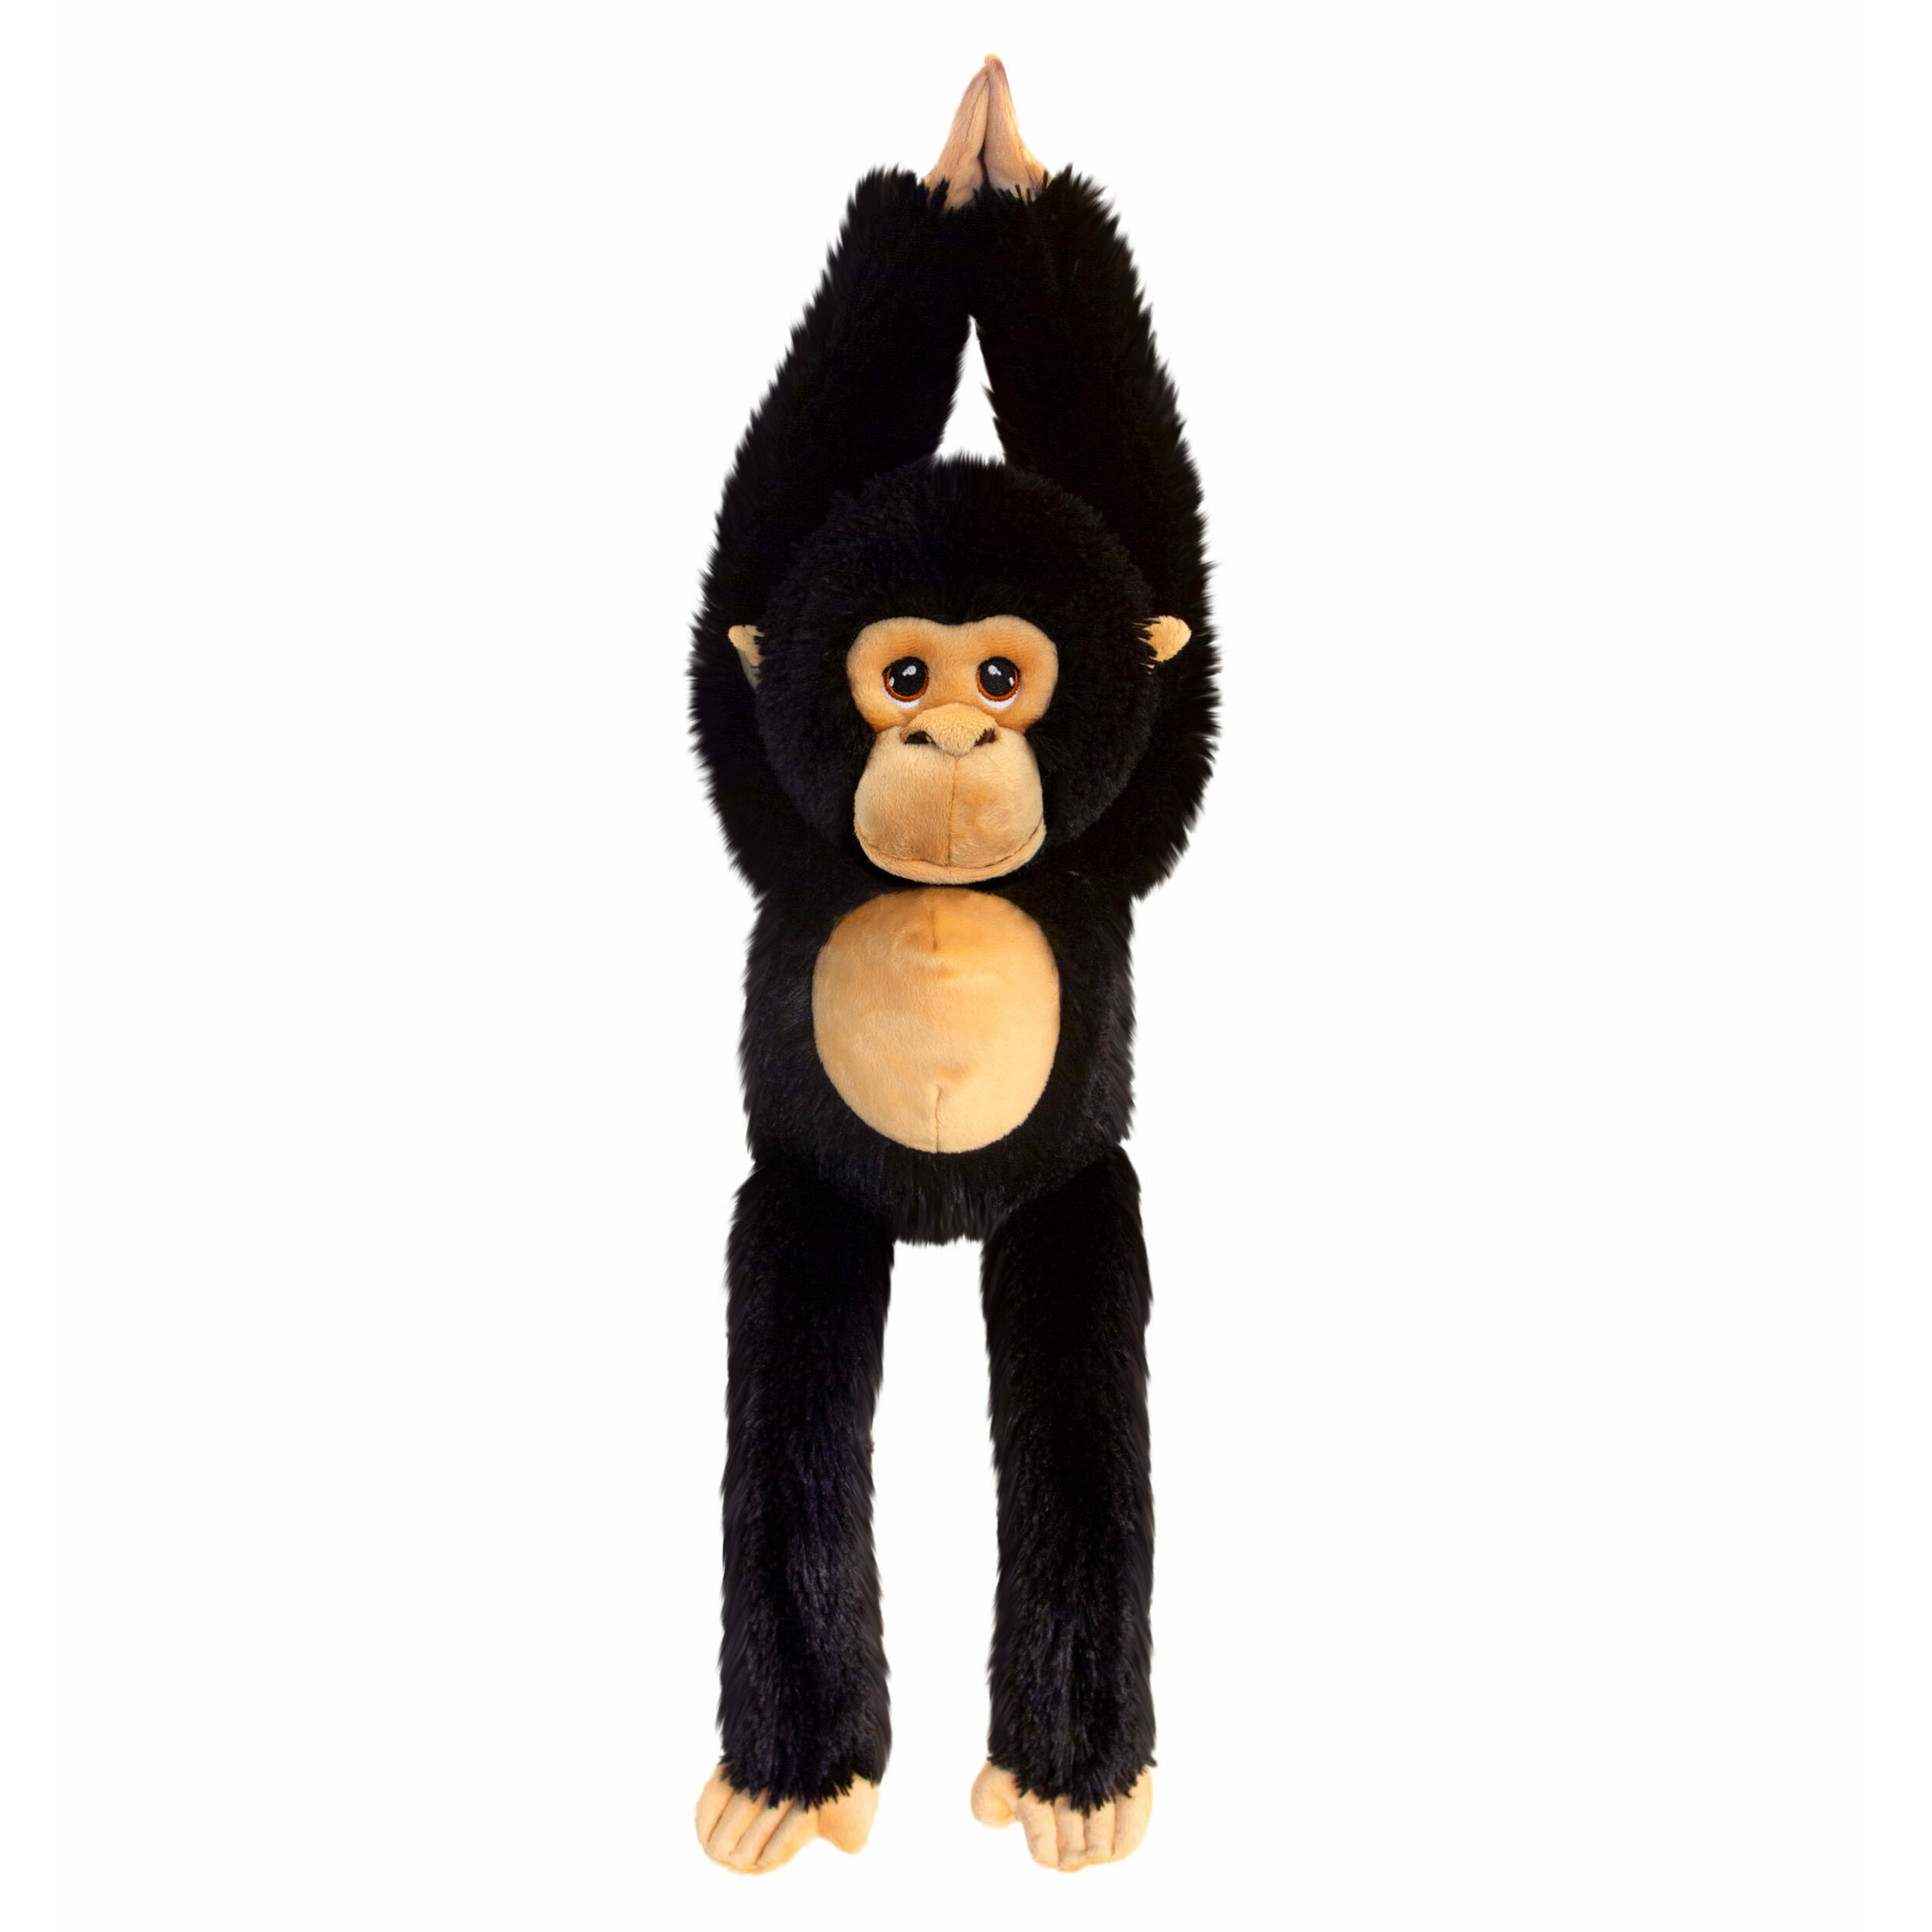 Keel Toys pluche Chimpansee aap knuffeldier zwart-bruin hangend 50 cm